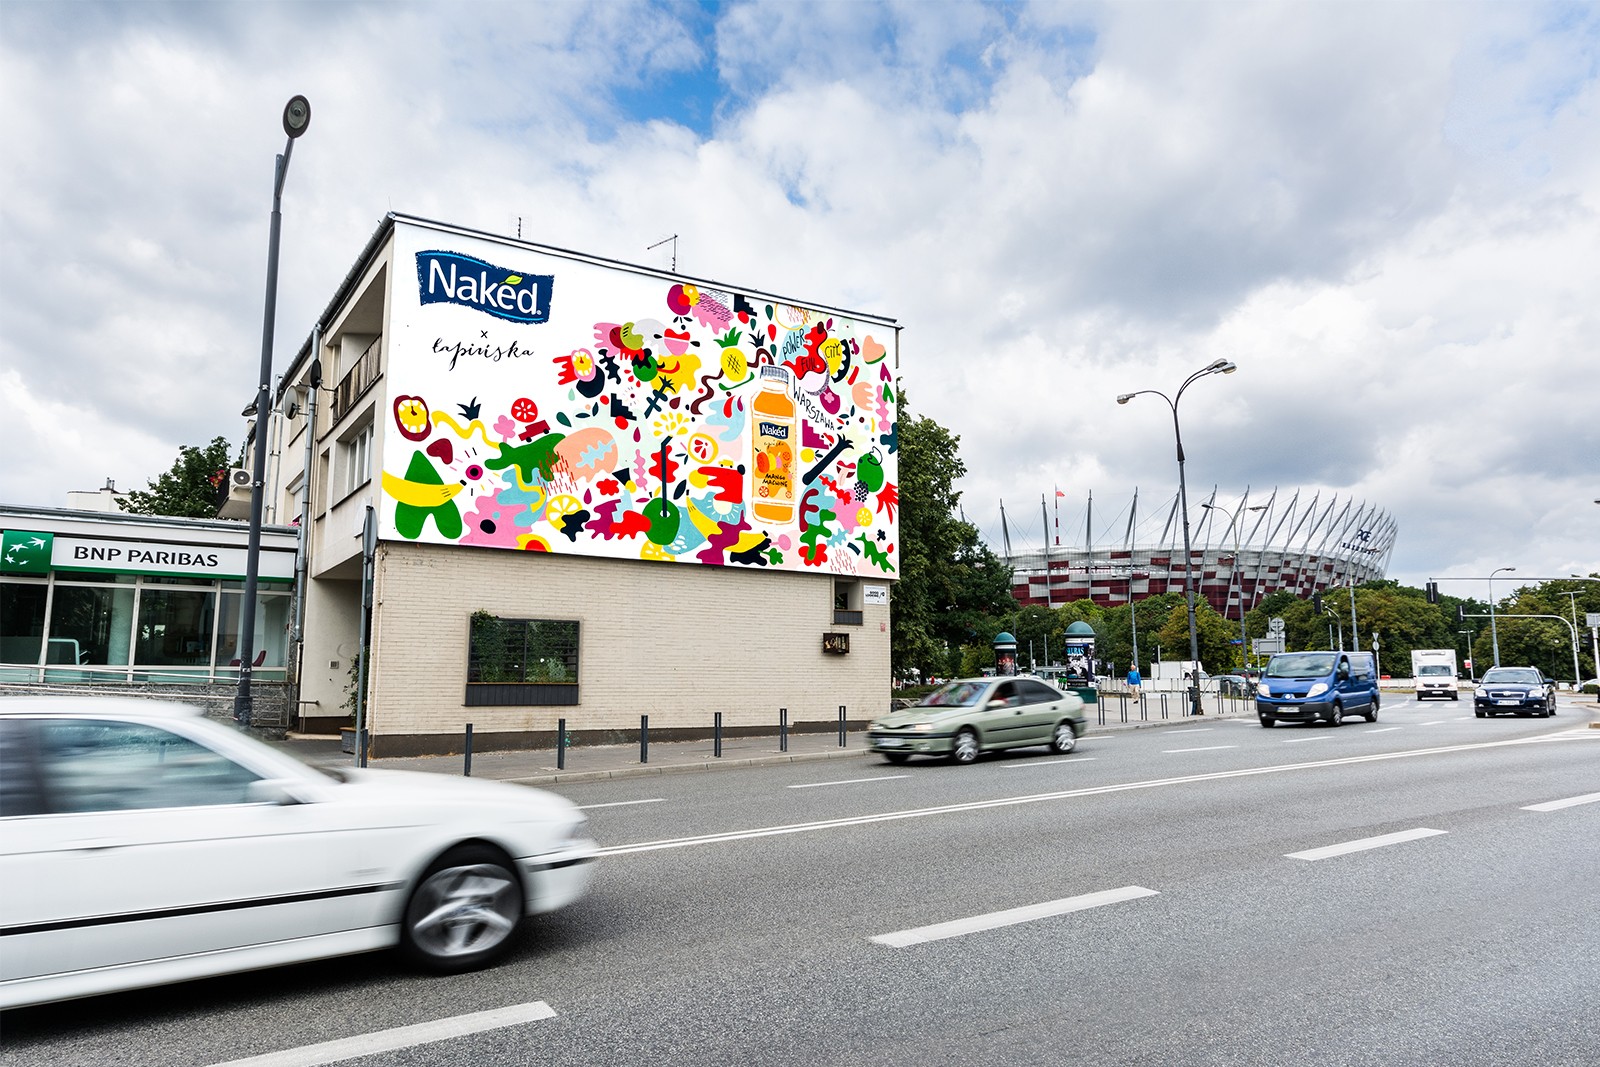 Naked's advertising mural on Francuska street in Warsaw | #PowerFullCity | Portfolio